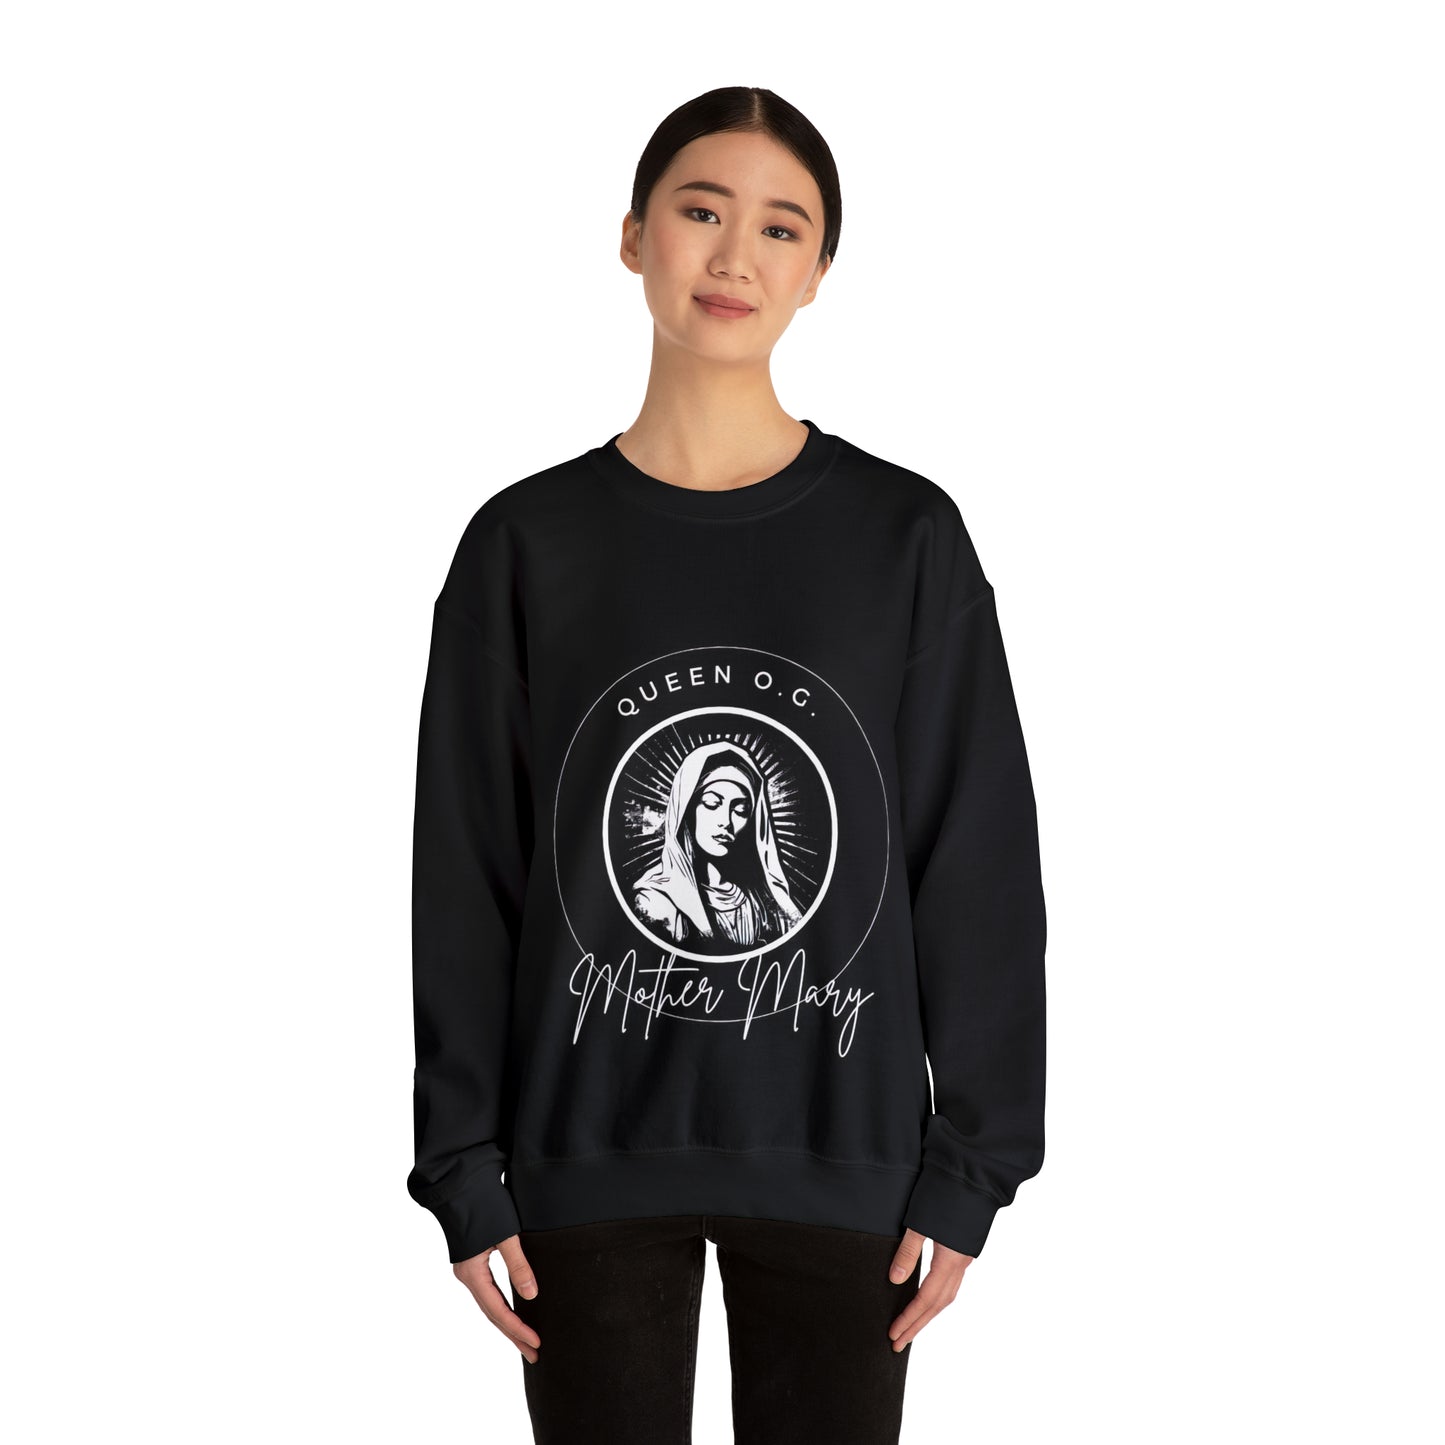 Mother Mary: The Queen O.G. -  Crewneck Sweatshirt - Women